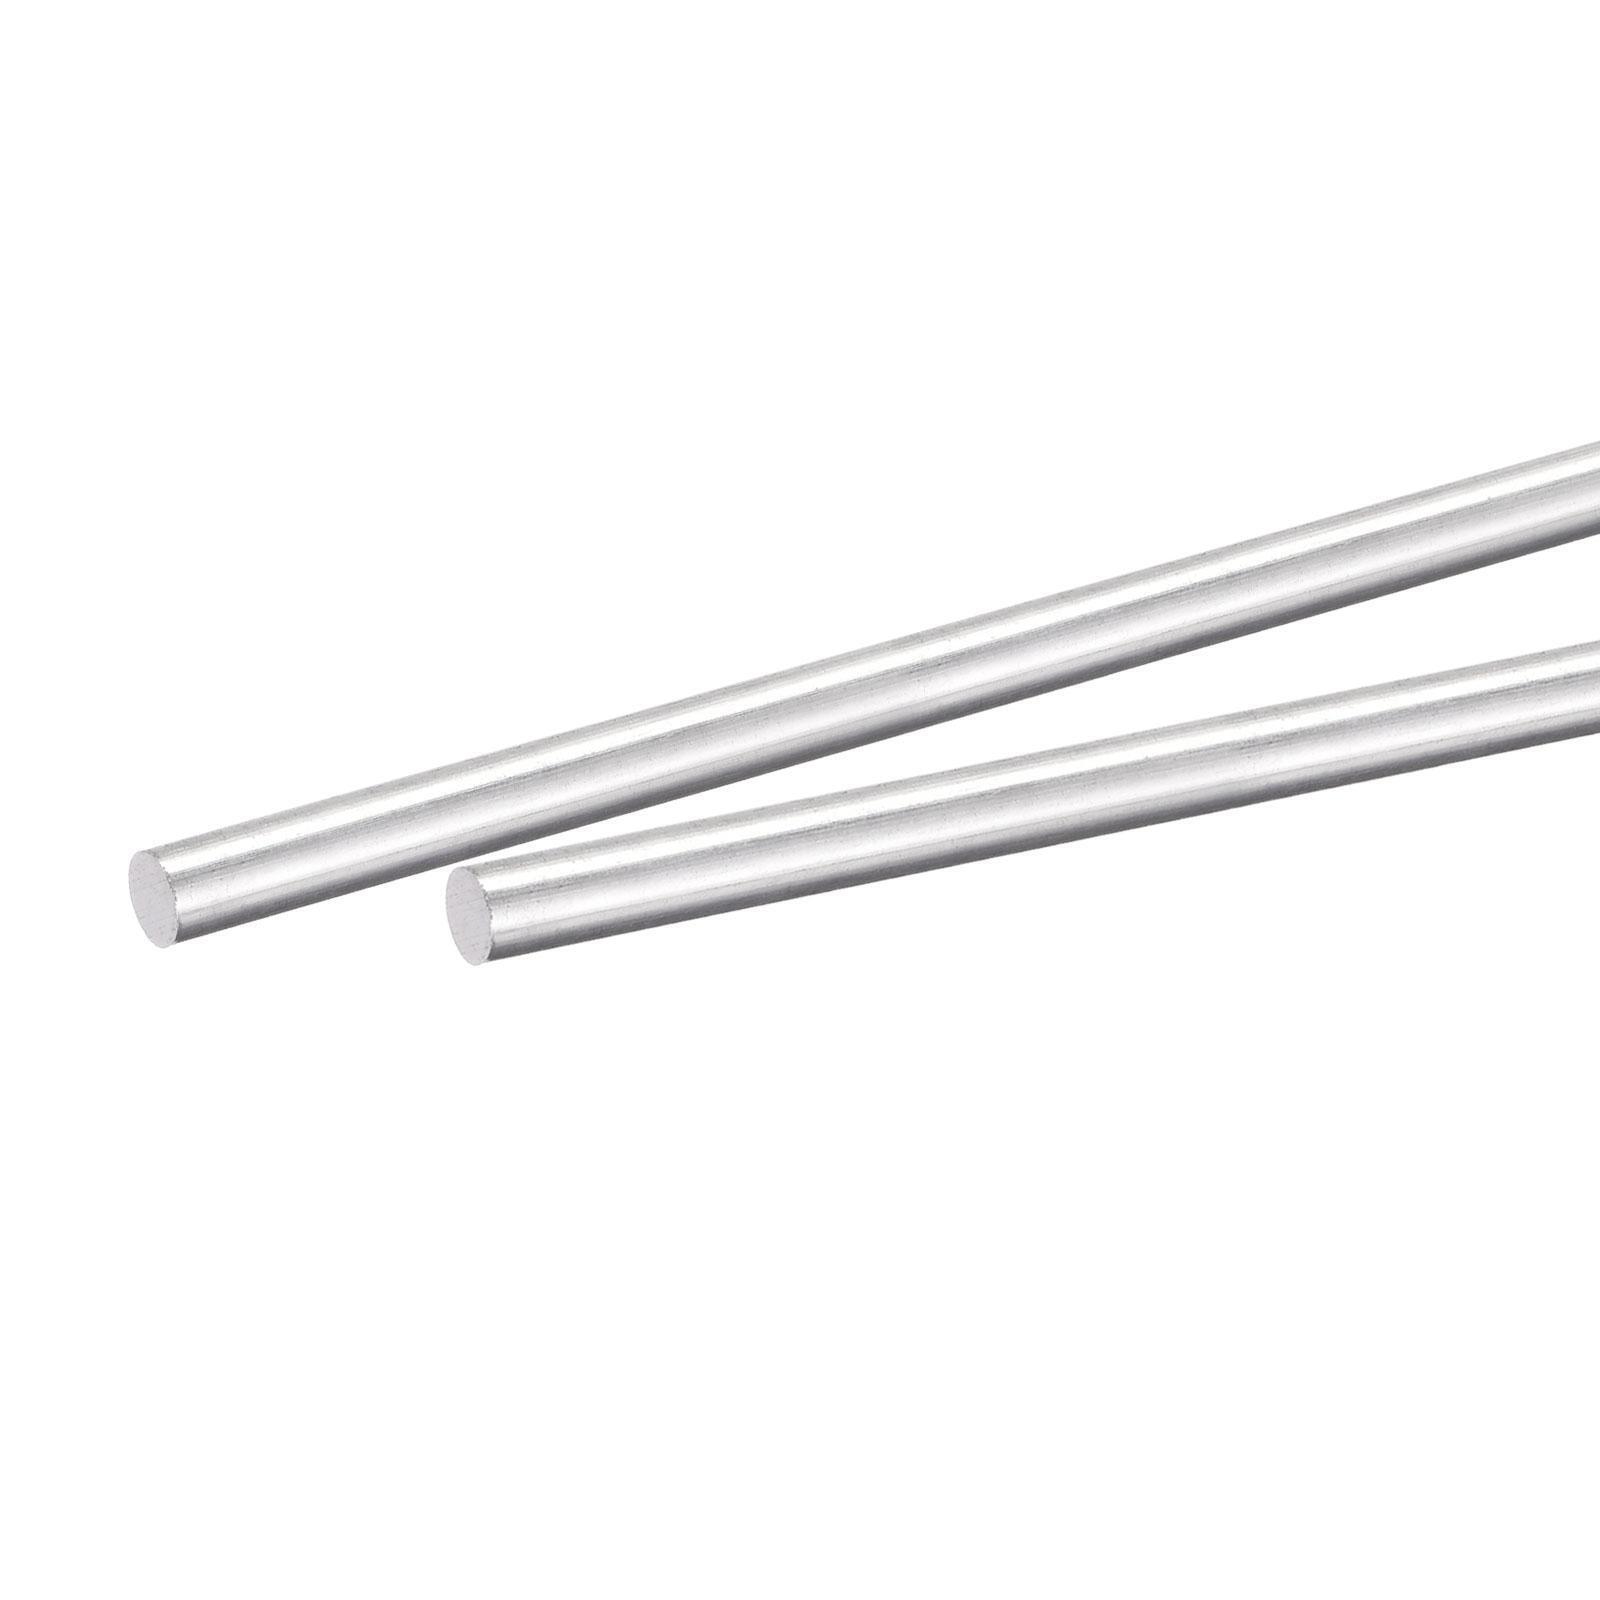 2pcs Aluminum Solid Round Rod 5mm Diameter 350mm Lathe Bar Stock